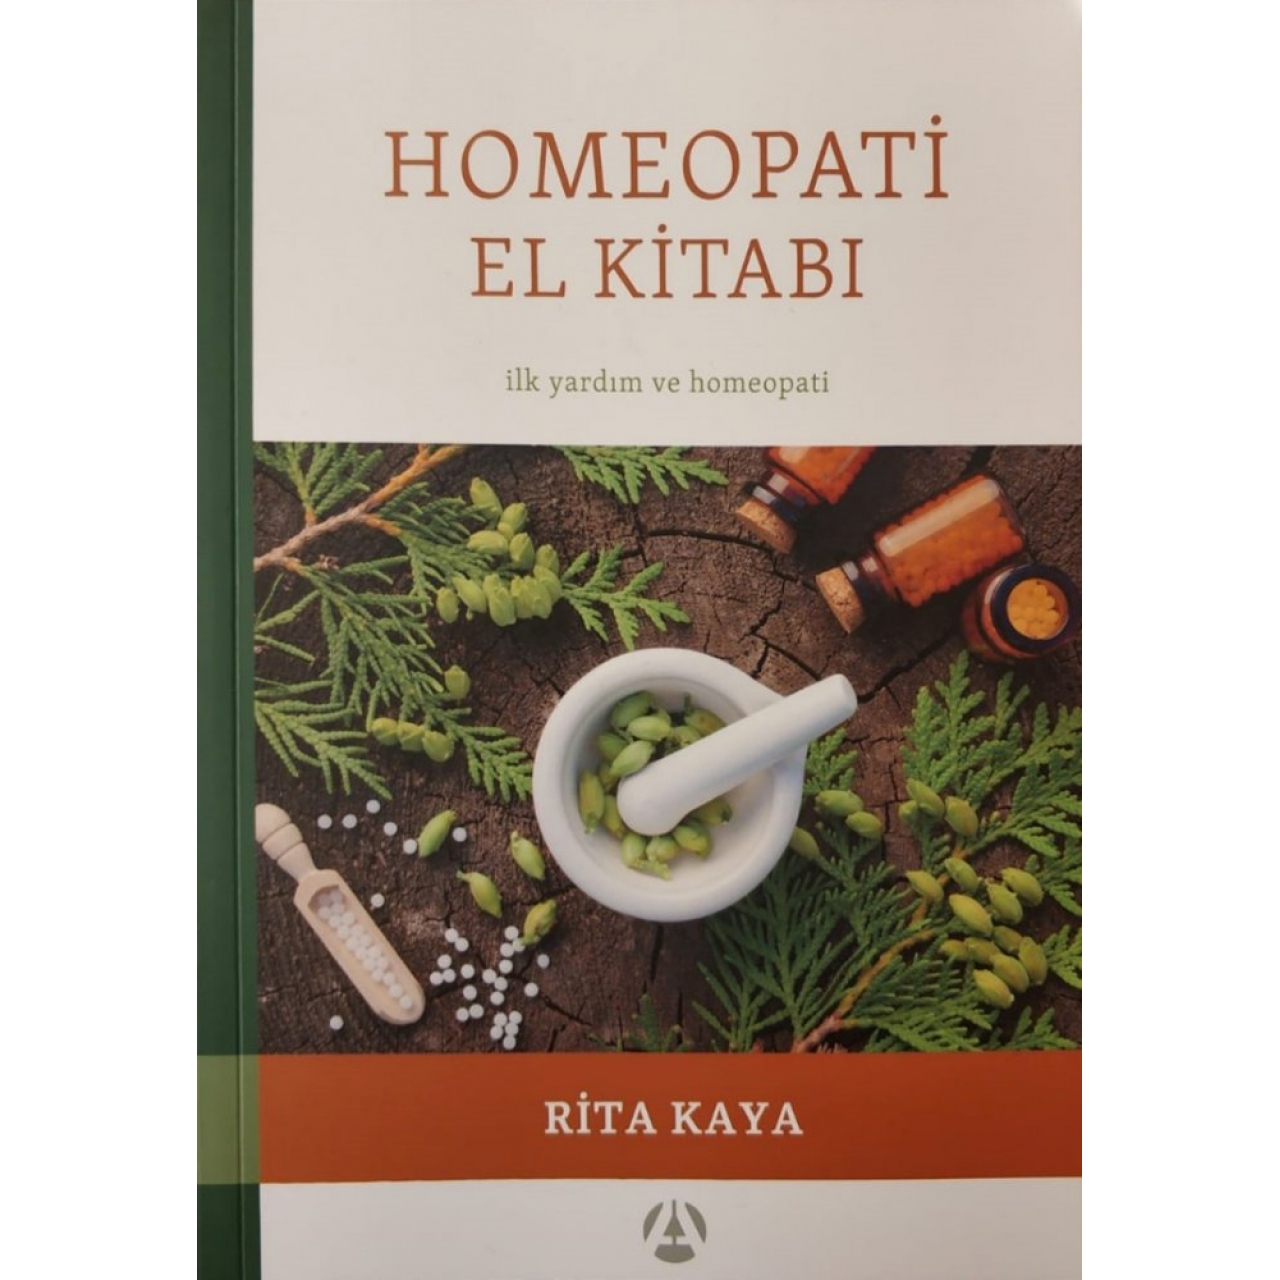 Homeopati El Kitabı - ilk yardım ve homeopati